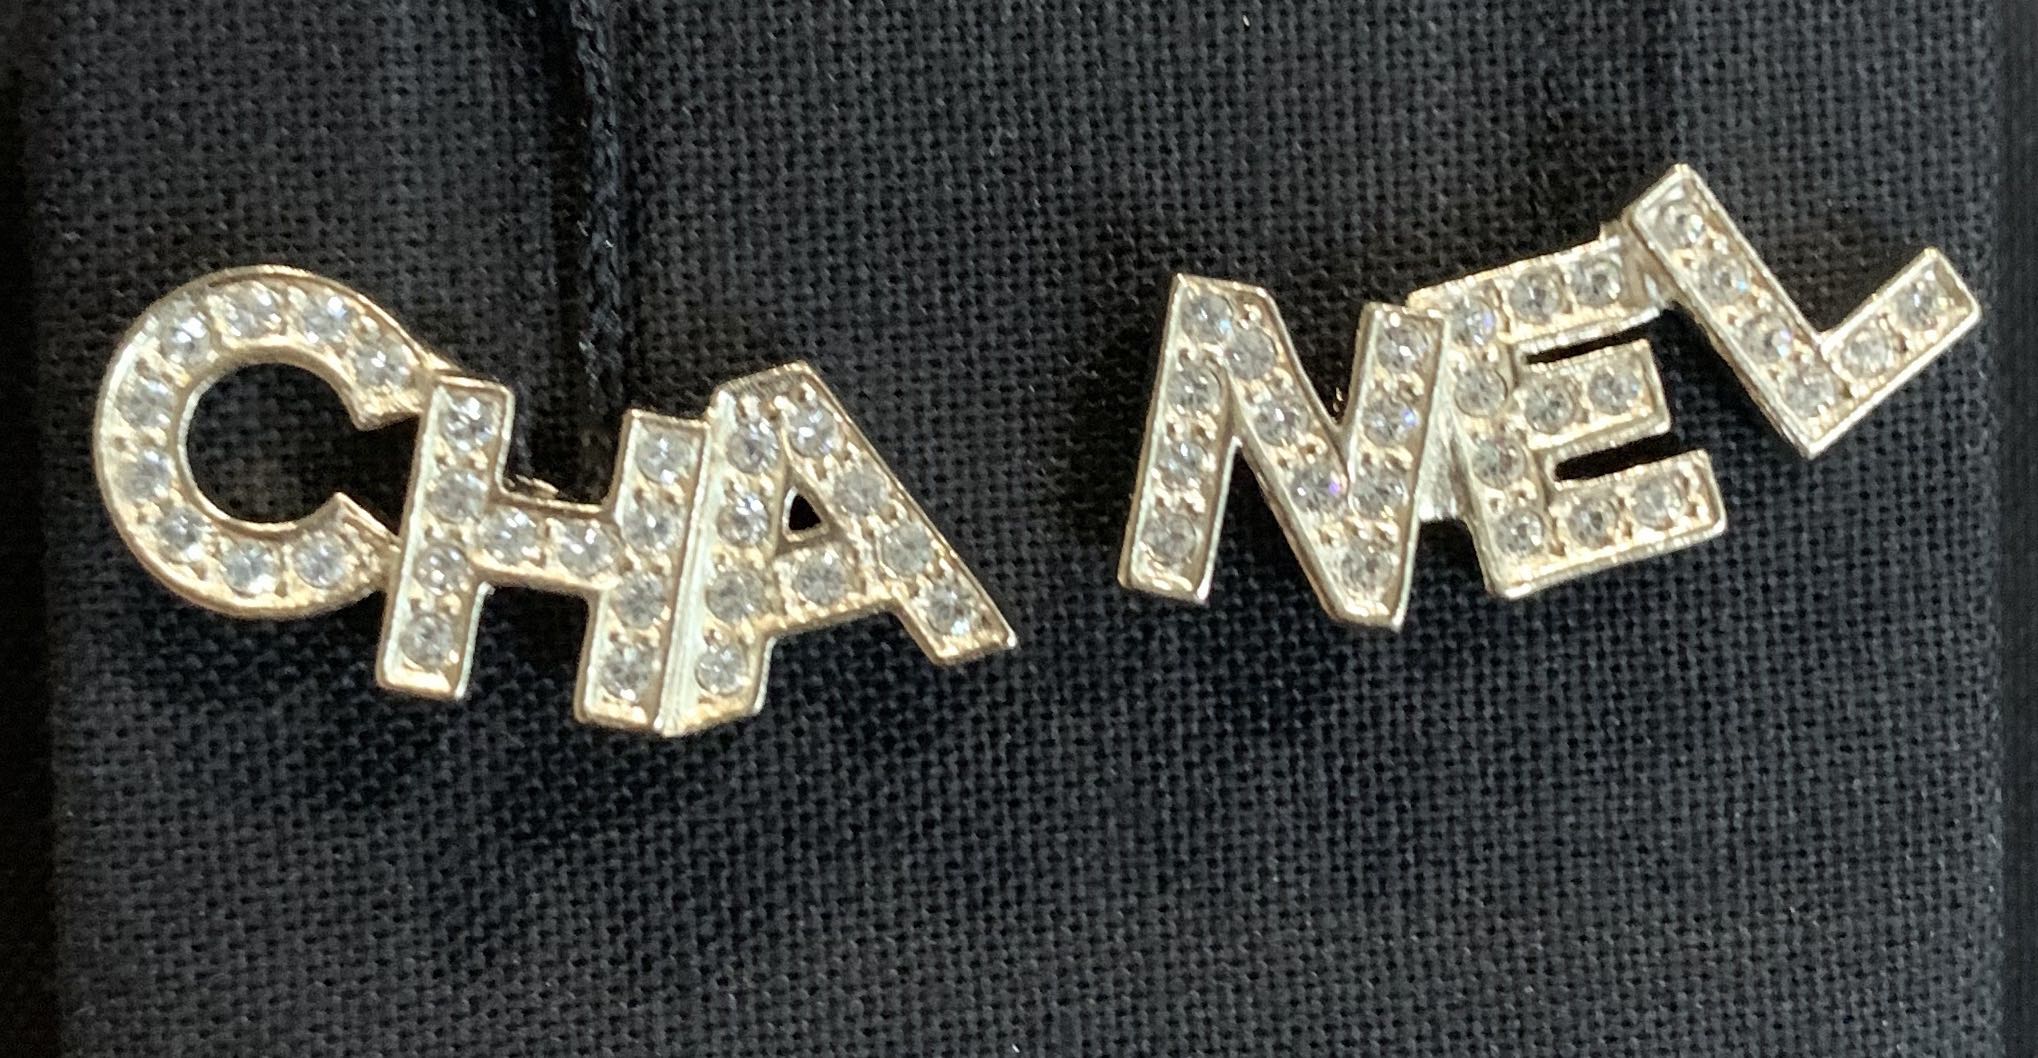 NWT Chanel RUNWAY CHA NEL Letter Logo Crystal Statement Earrings w